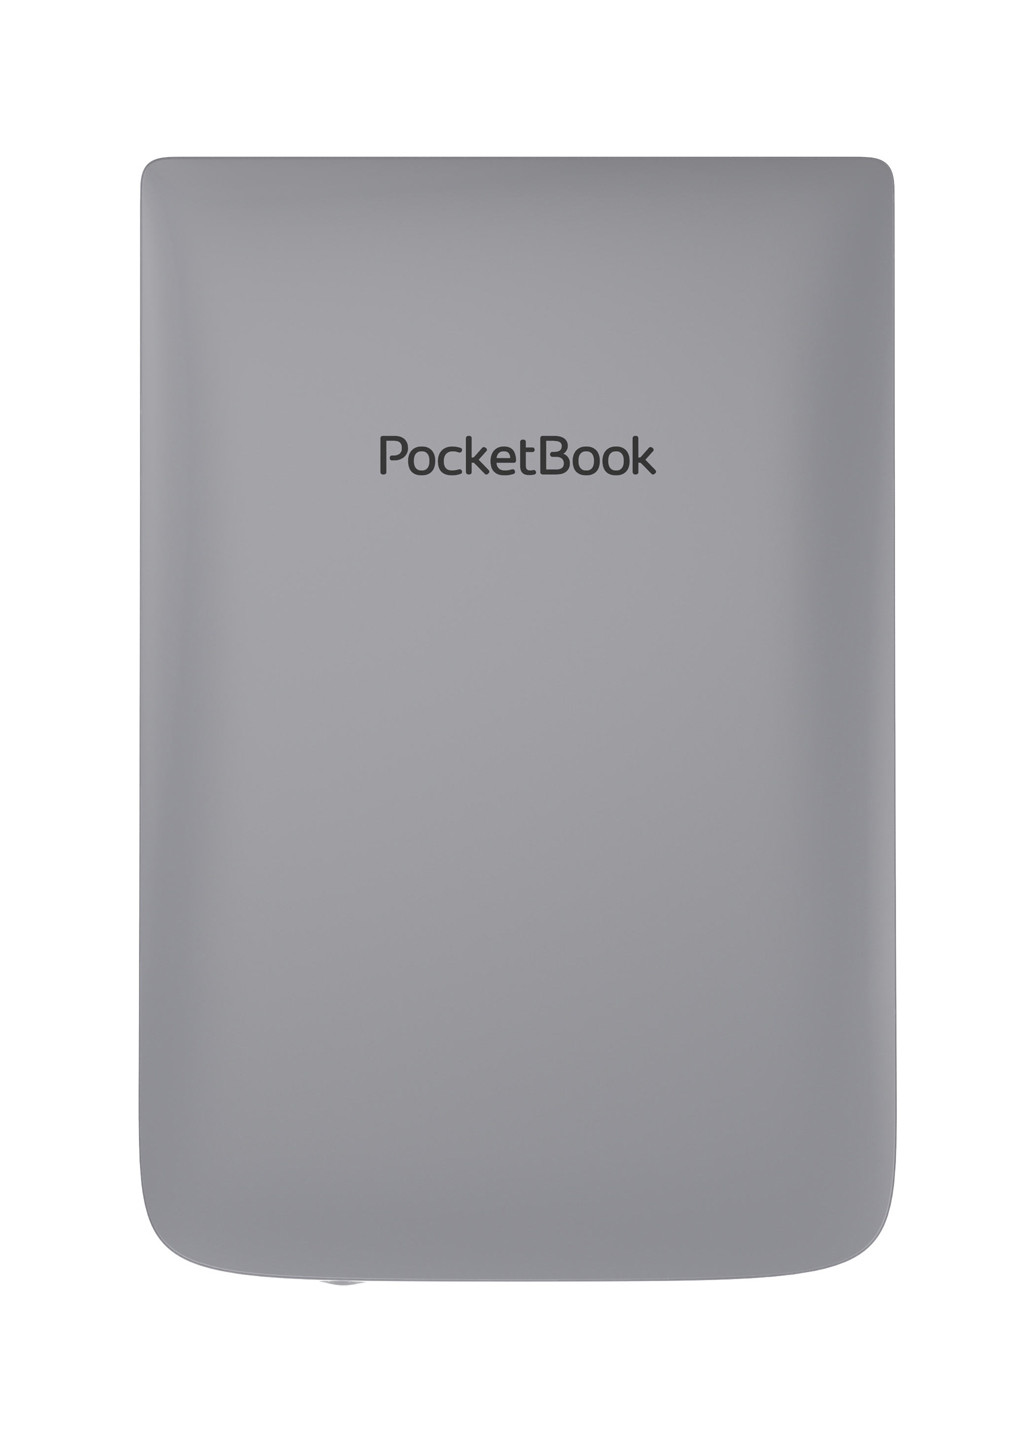 Электронная книга PocketBook 616 Basic Lux 2 (PB616-S-CIS) Matte Silver серебряная